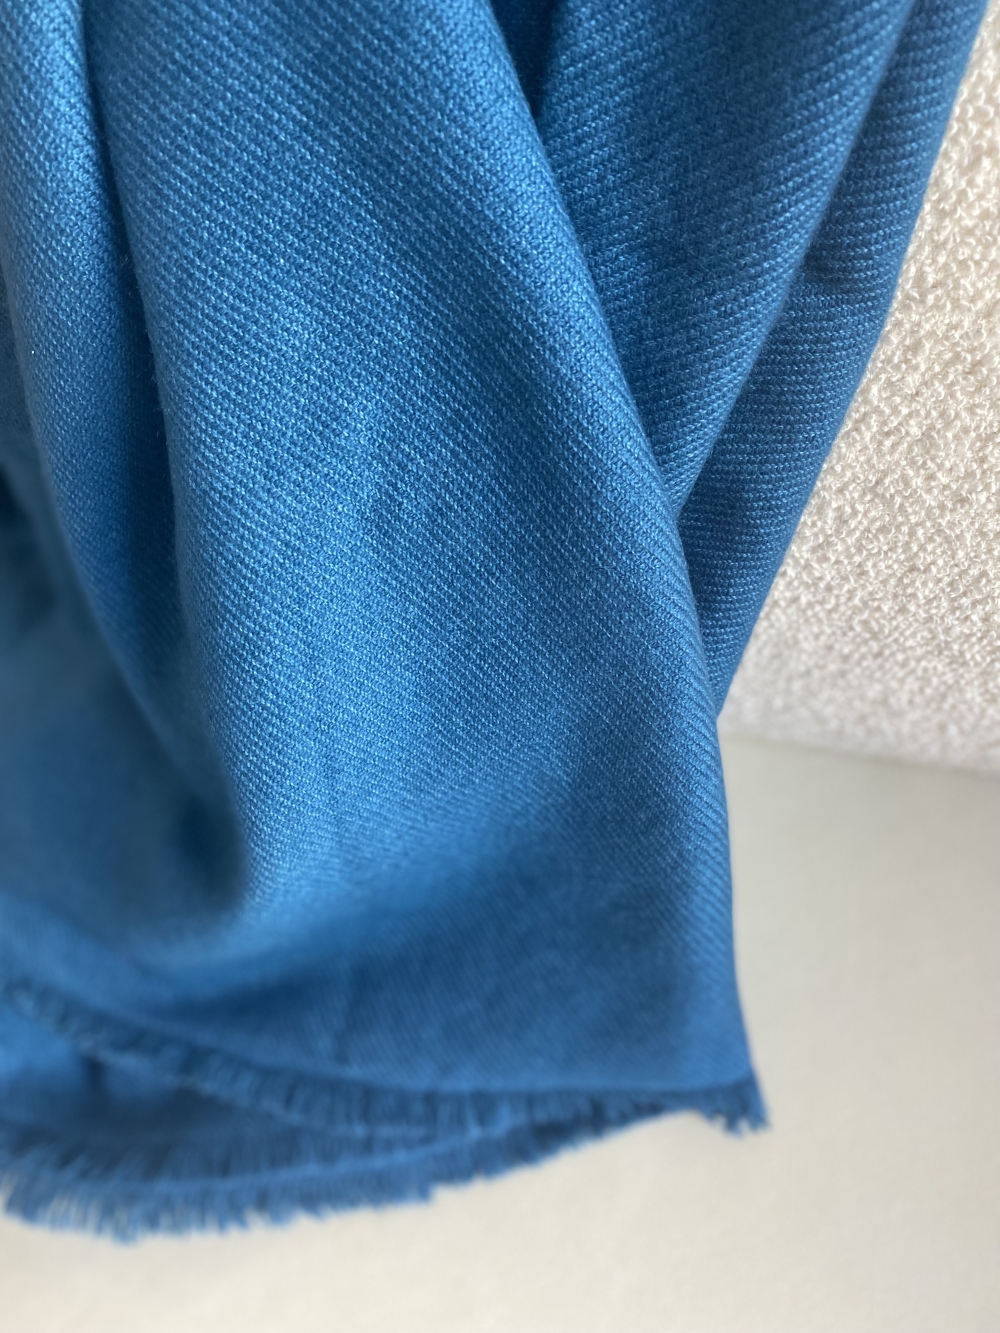 Cashmere cashmere donna toodoo plain s 140 x 200 blu anatra 140 x 200 cm